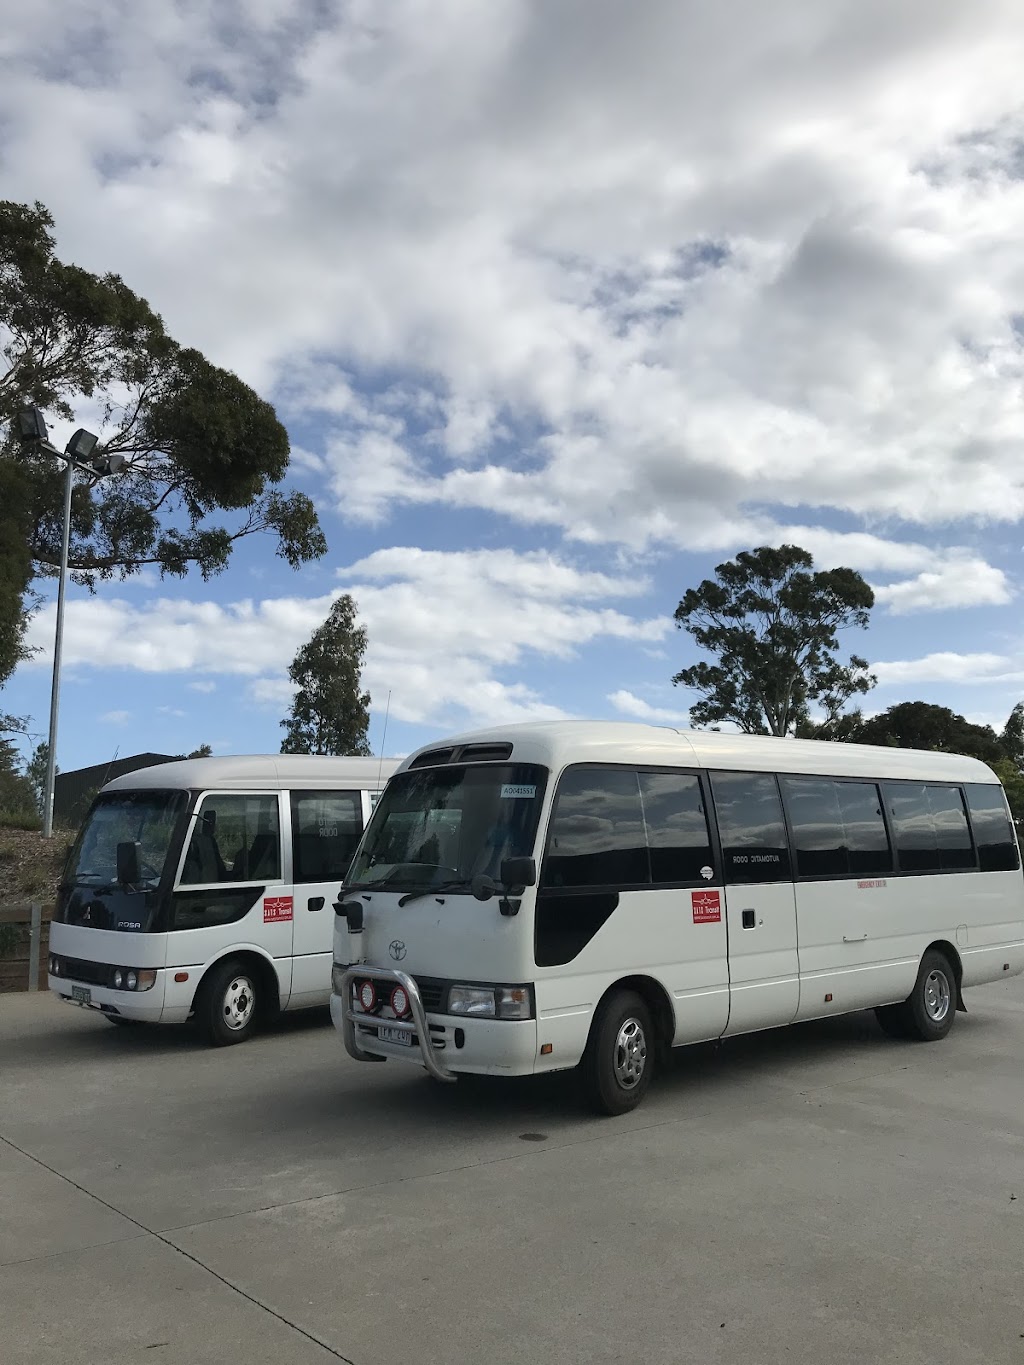 SATS Transit - Bus Charter | 7 Stevens Rd, St Albans VIC 3021, Australia | Phone: 0434 380 698